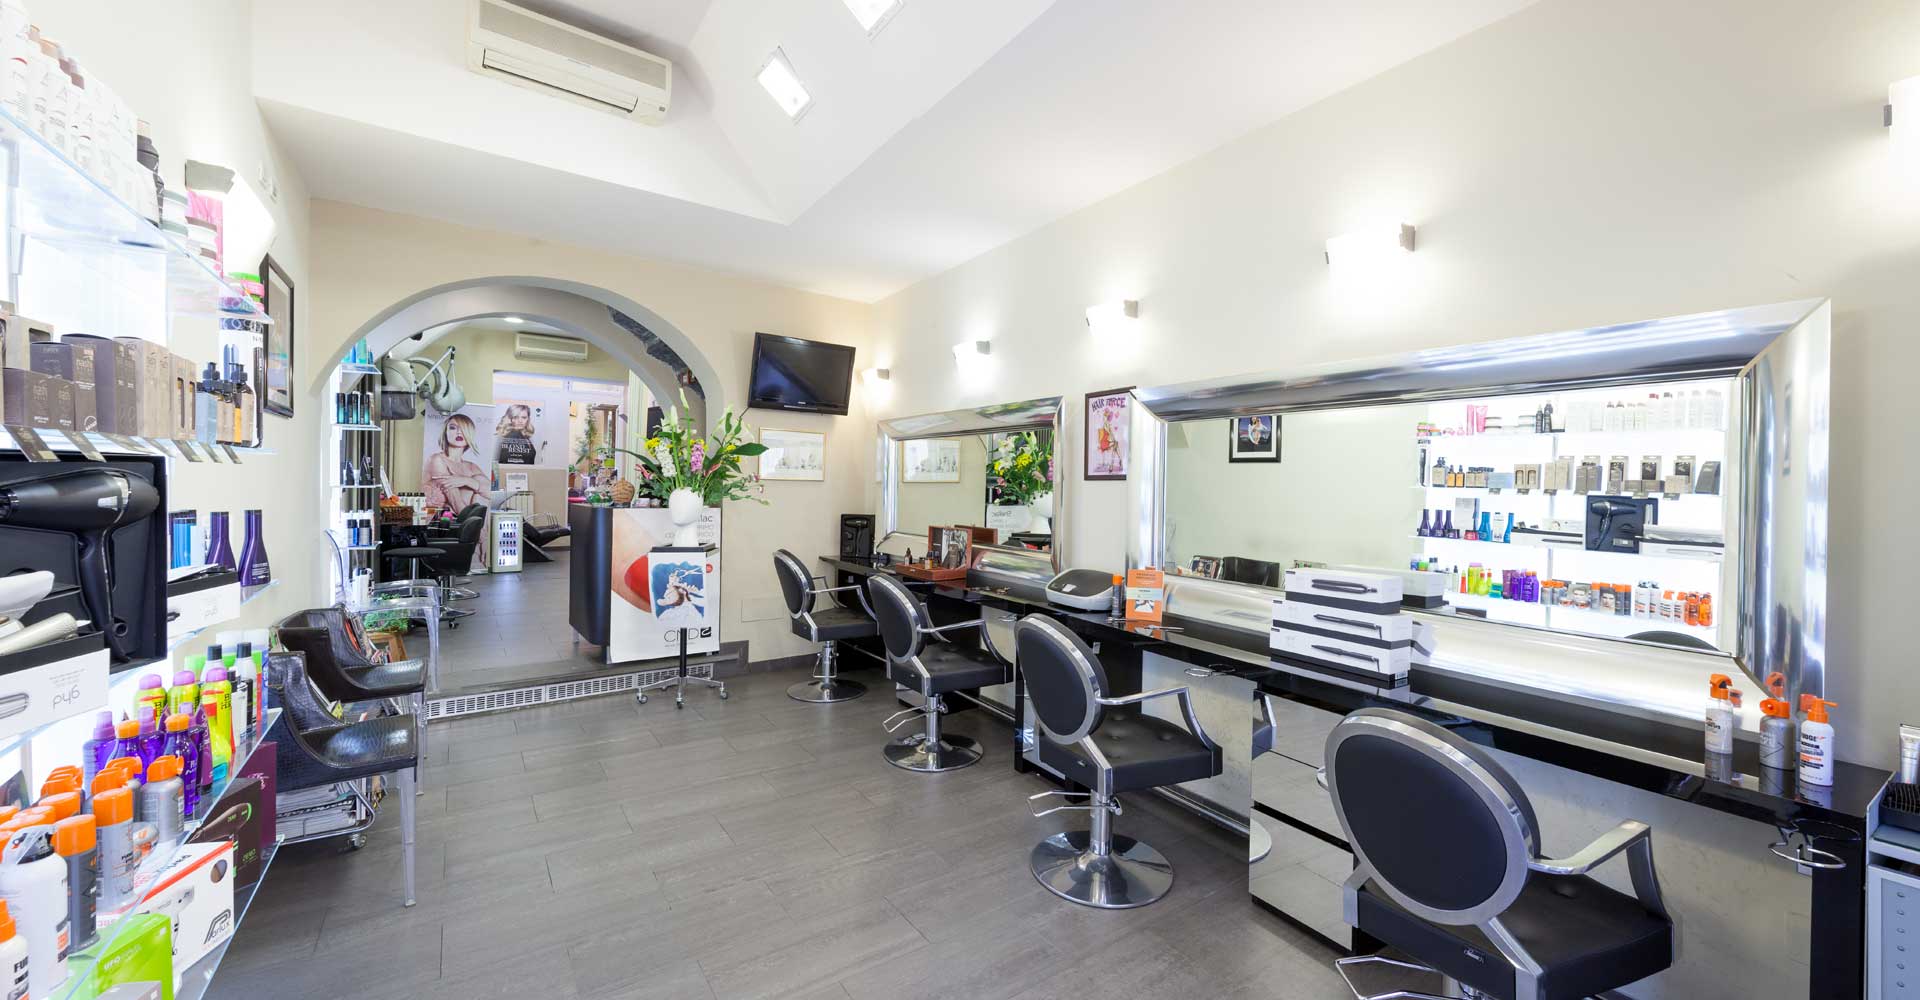 Hairforce Unisex Hair Styling Salon - Florence Italy